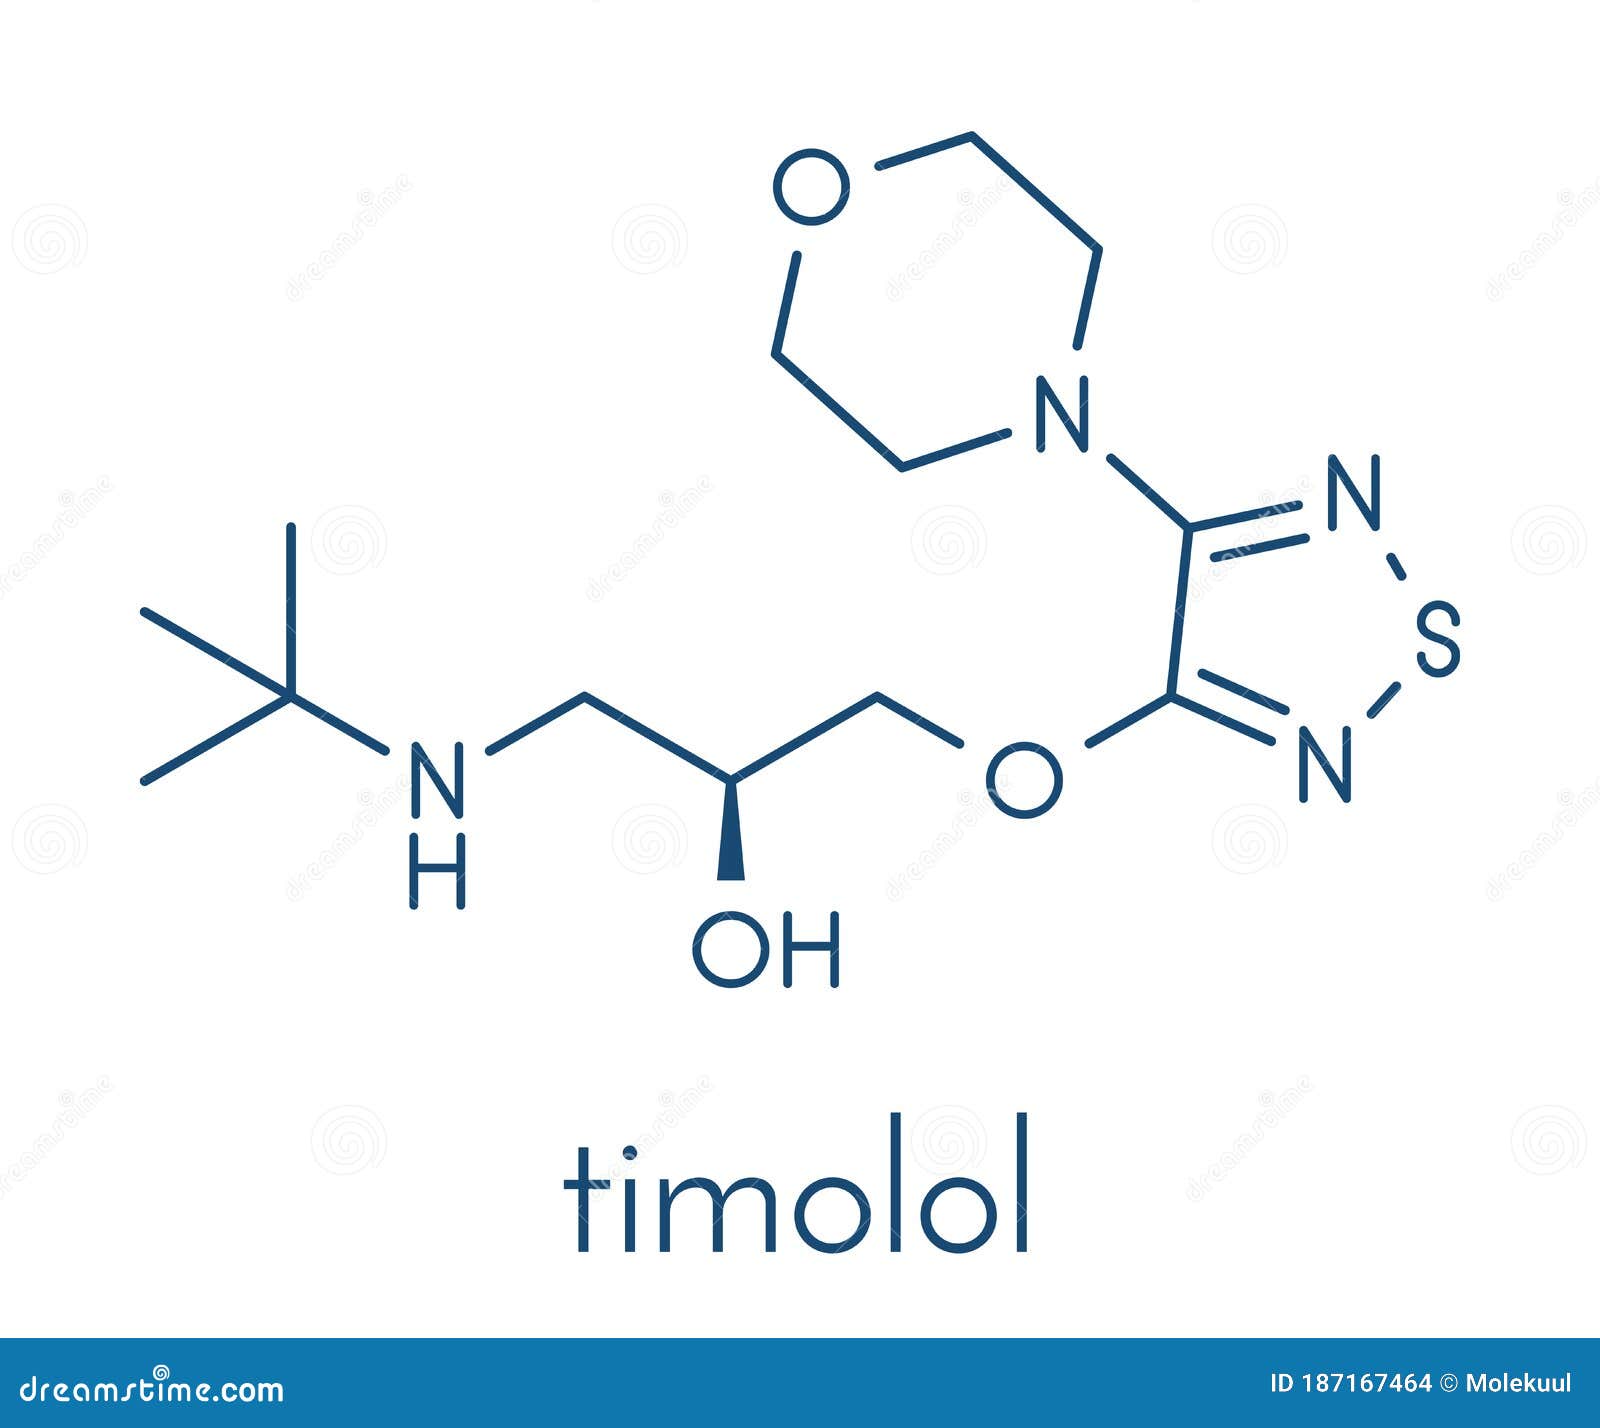 timolol beta-adrenergic receptor antagonist drug molecule. used in treatment of glaucoma, migraine, hypertension, etc. skeletal.